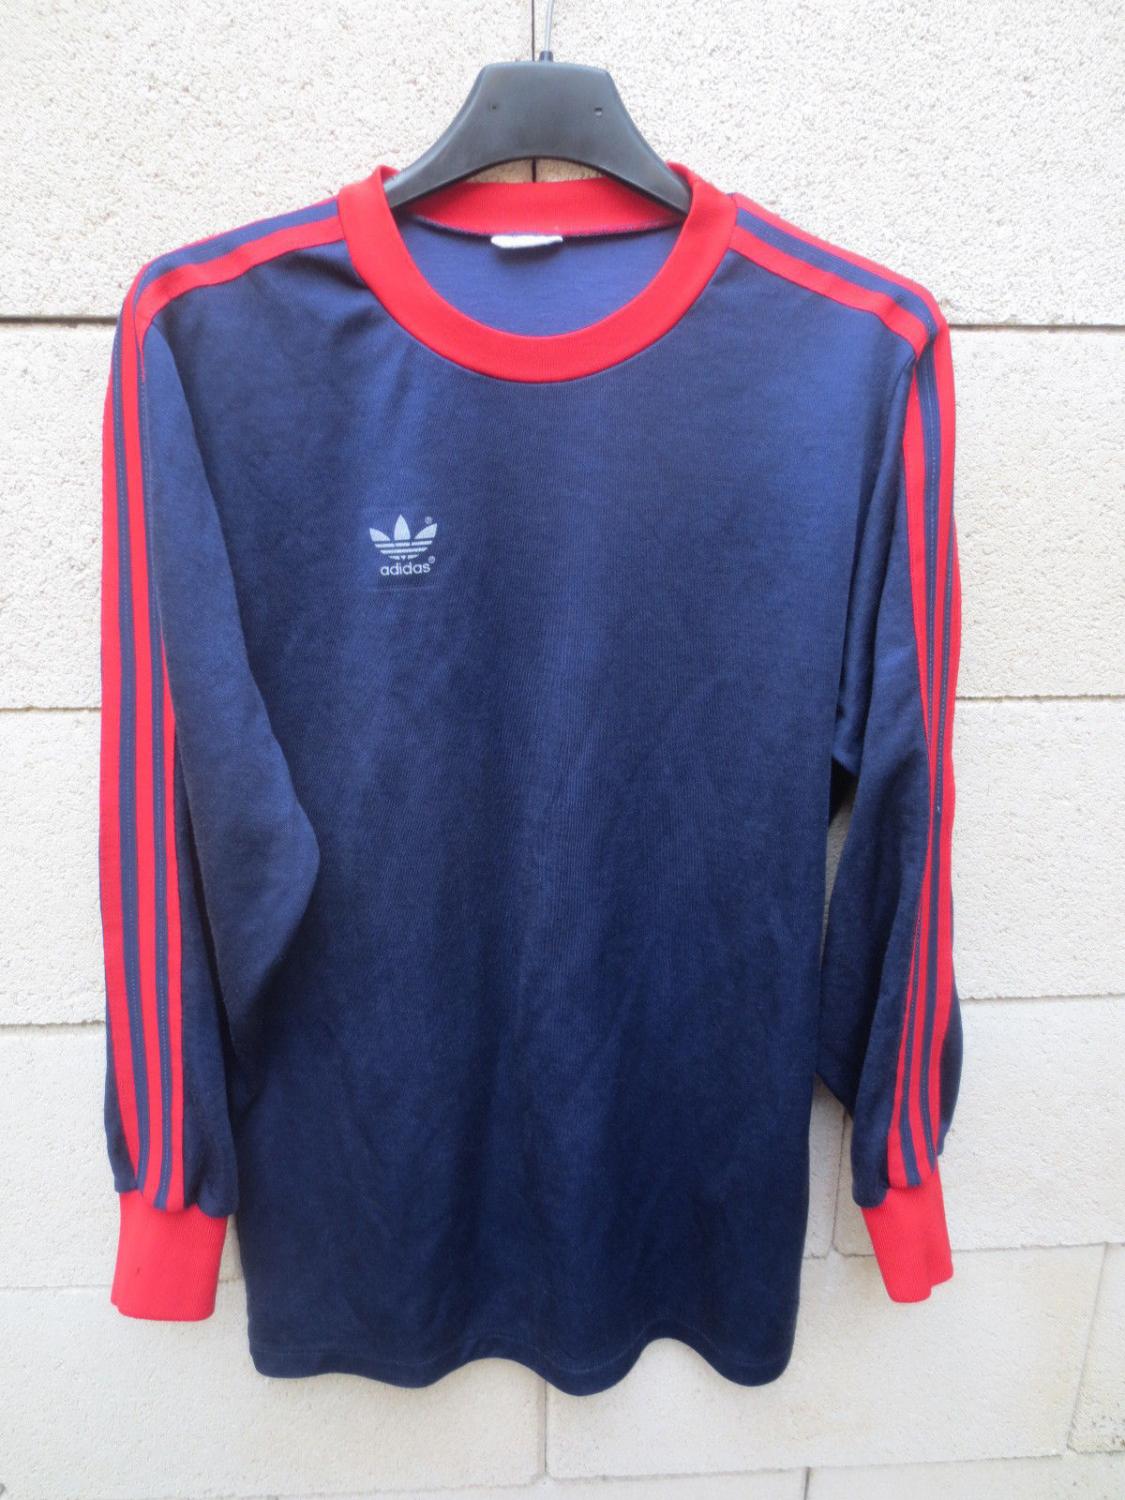 CSA Steaua București Unknown shirt type 1986 - ?. Sponsored by no sponsor